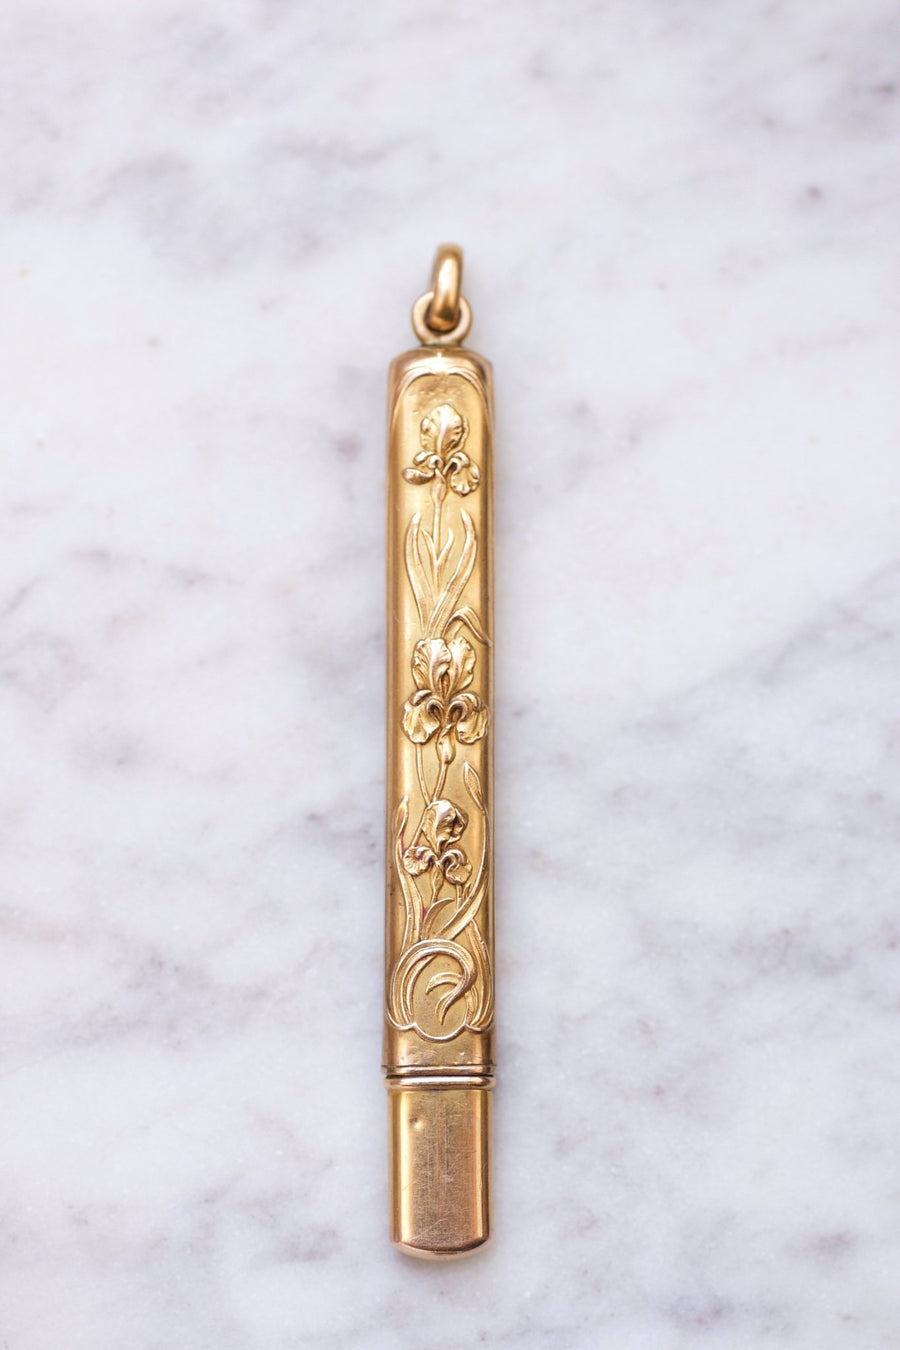 Art Nouveau pencil pendant by Dropsy, Circa 1910